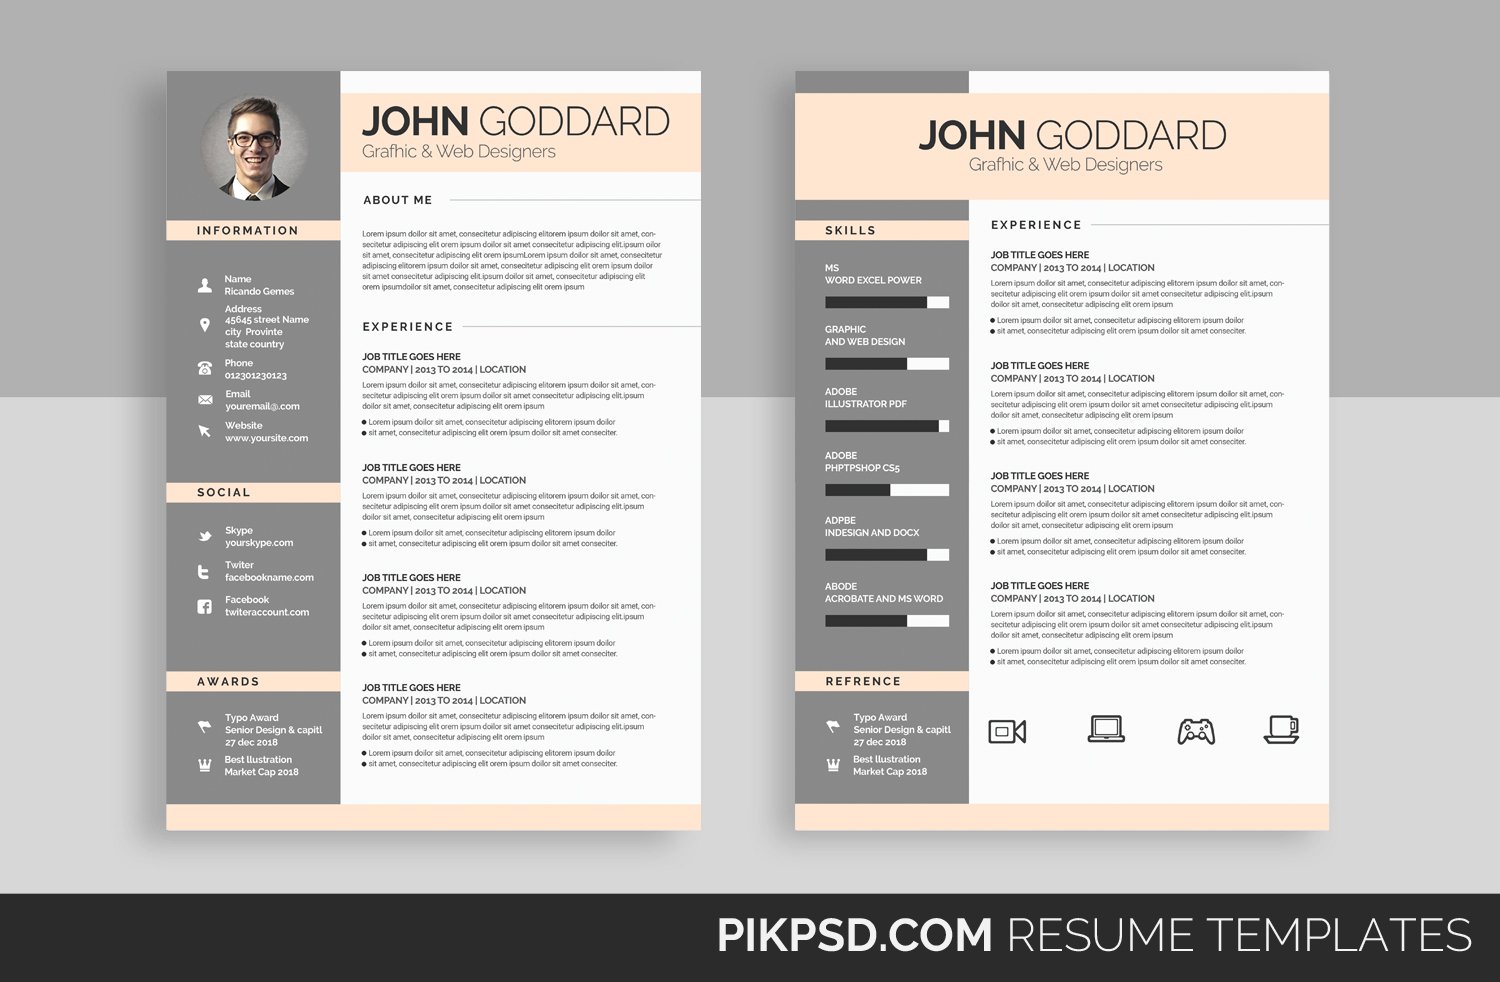 Ready 3-Piece Resume/CV Set cover image.